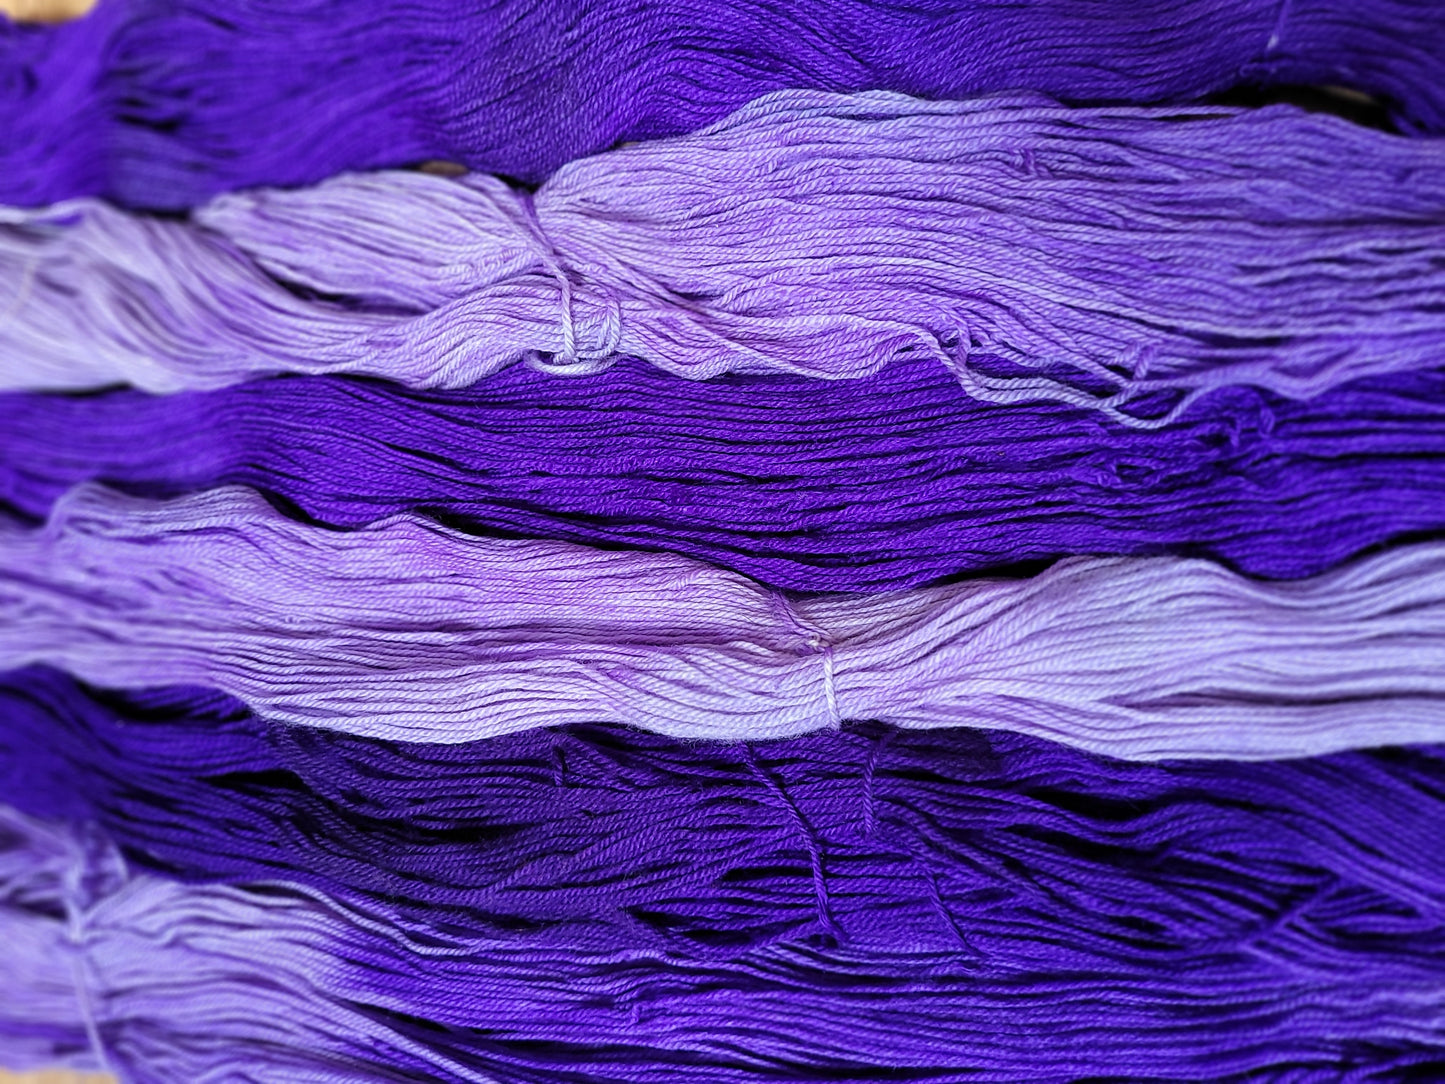 Cashmara Sock - Shades of Violet